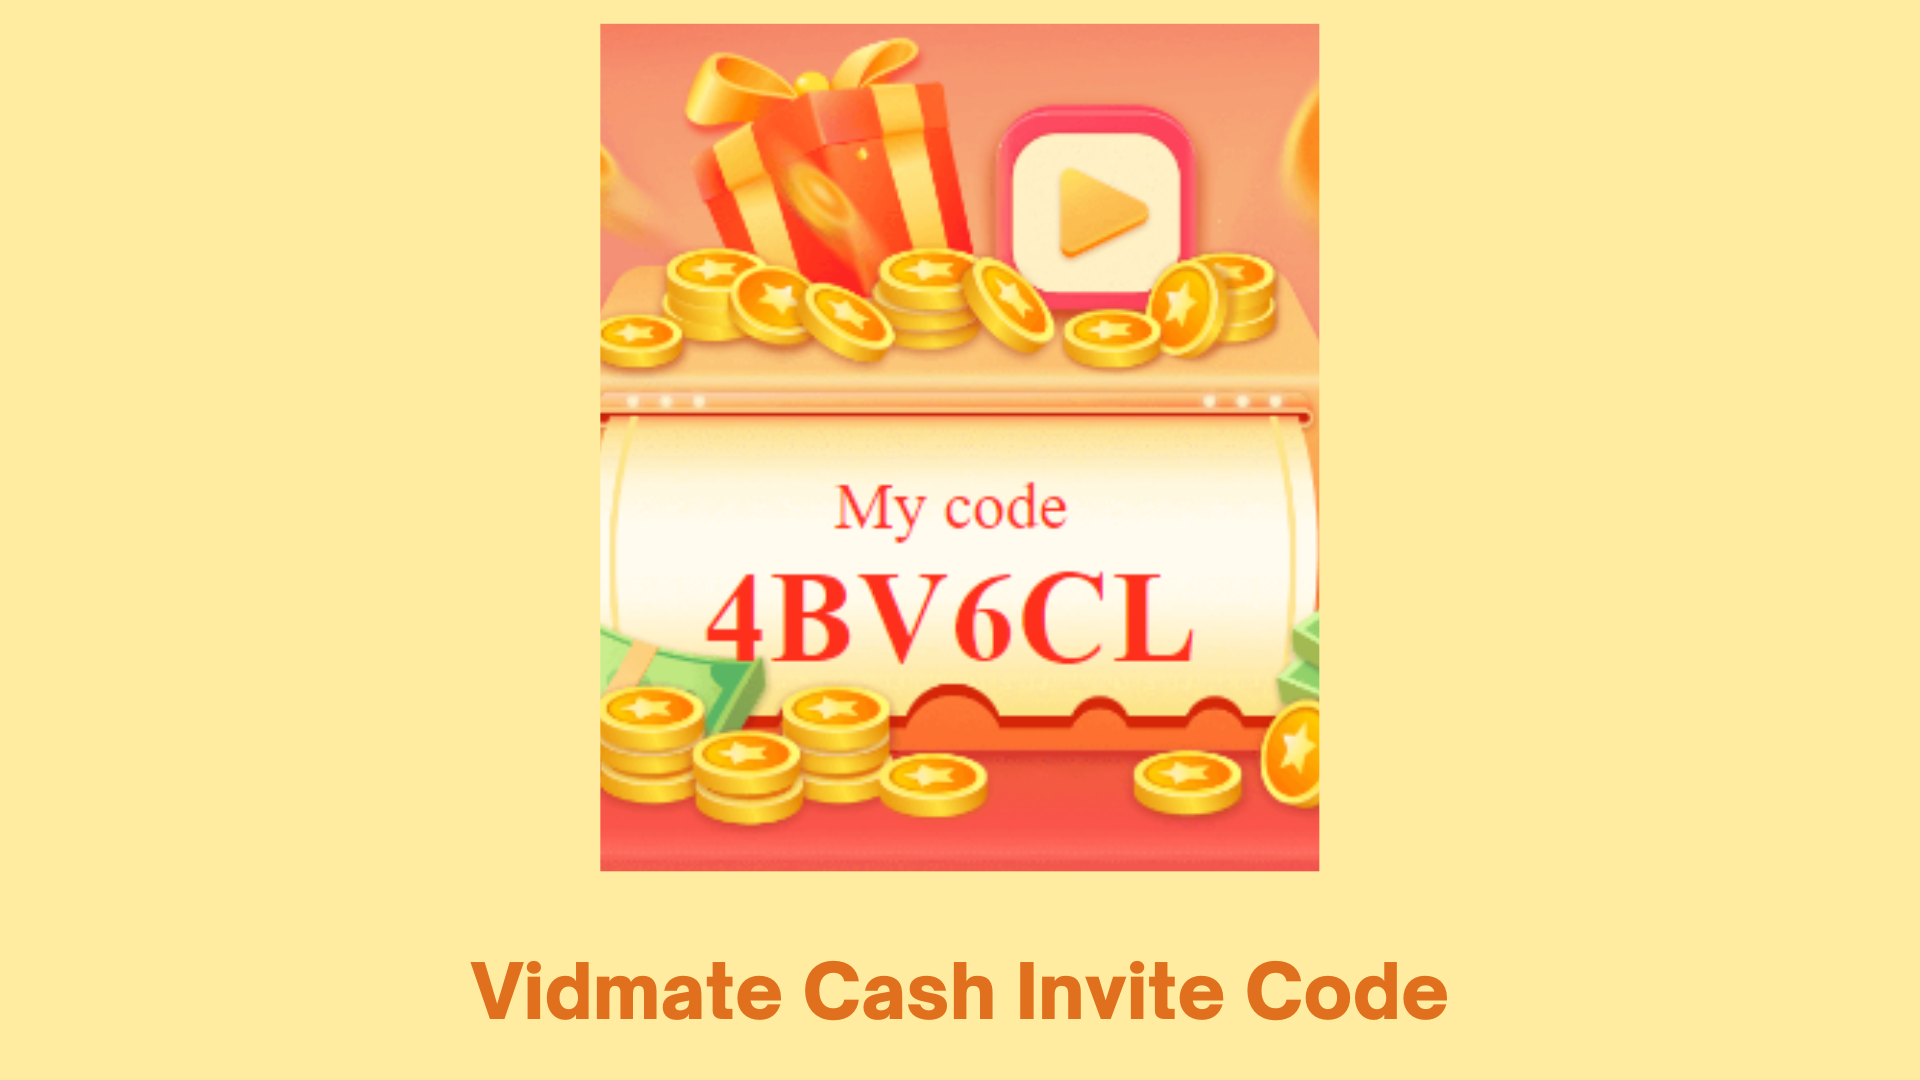 Vidmate Cash Invite Code